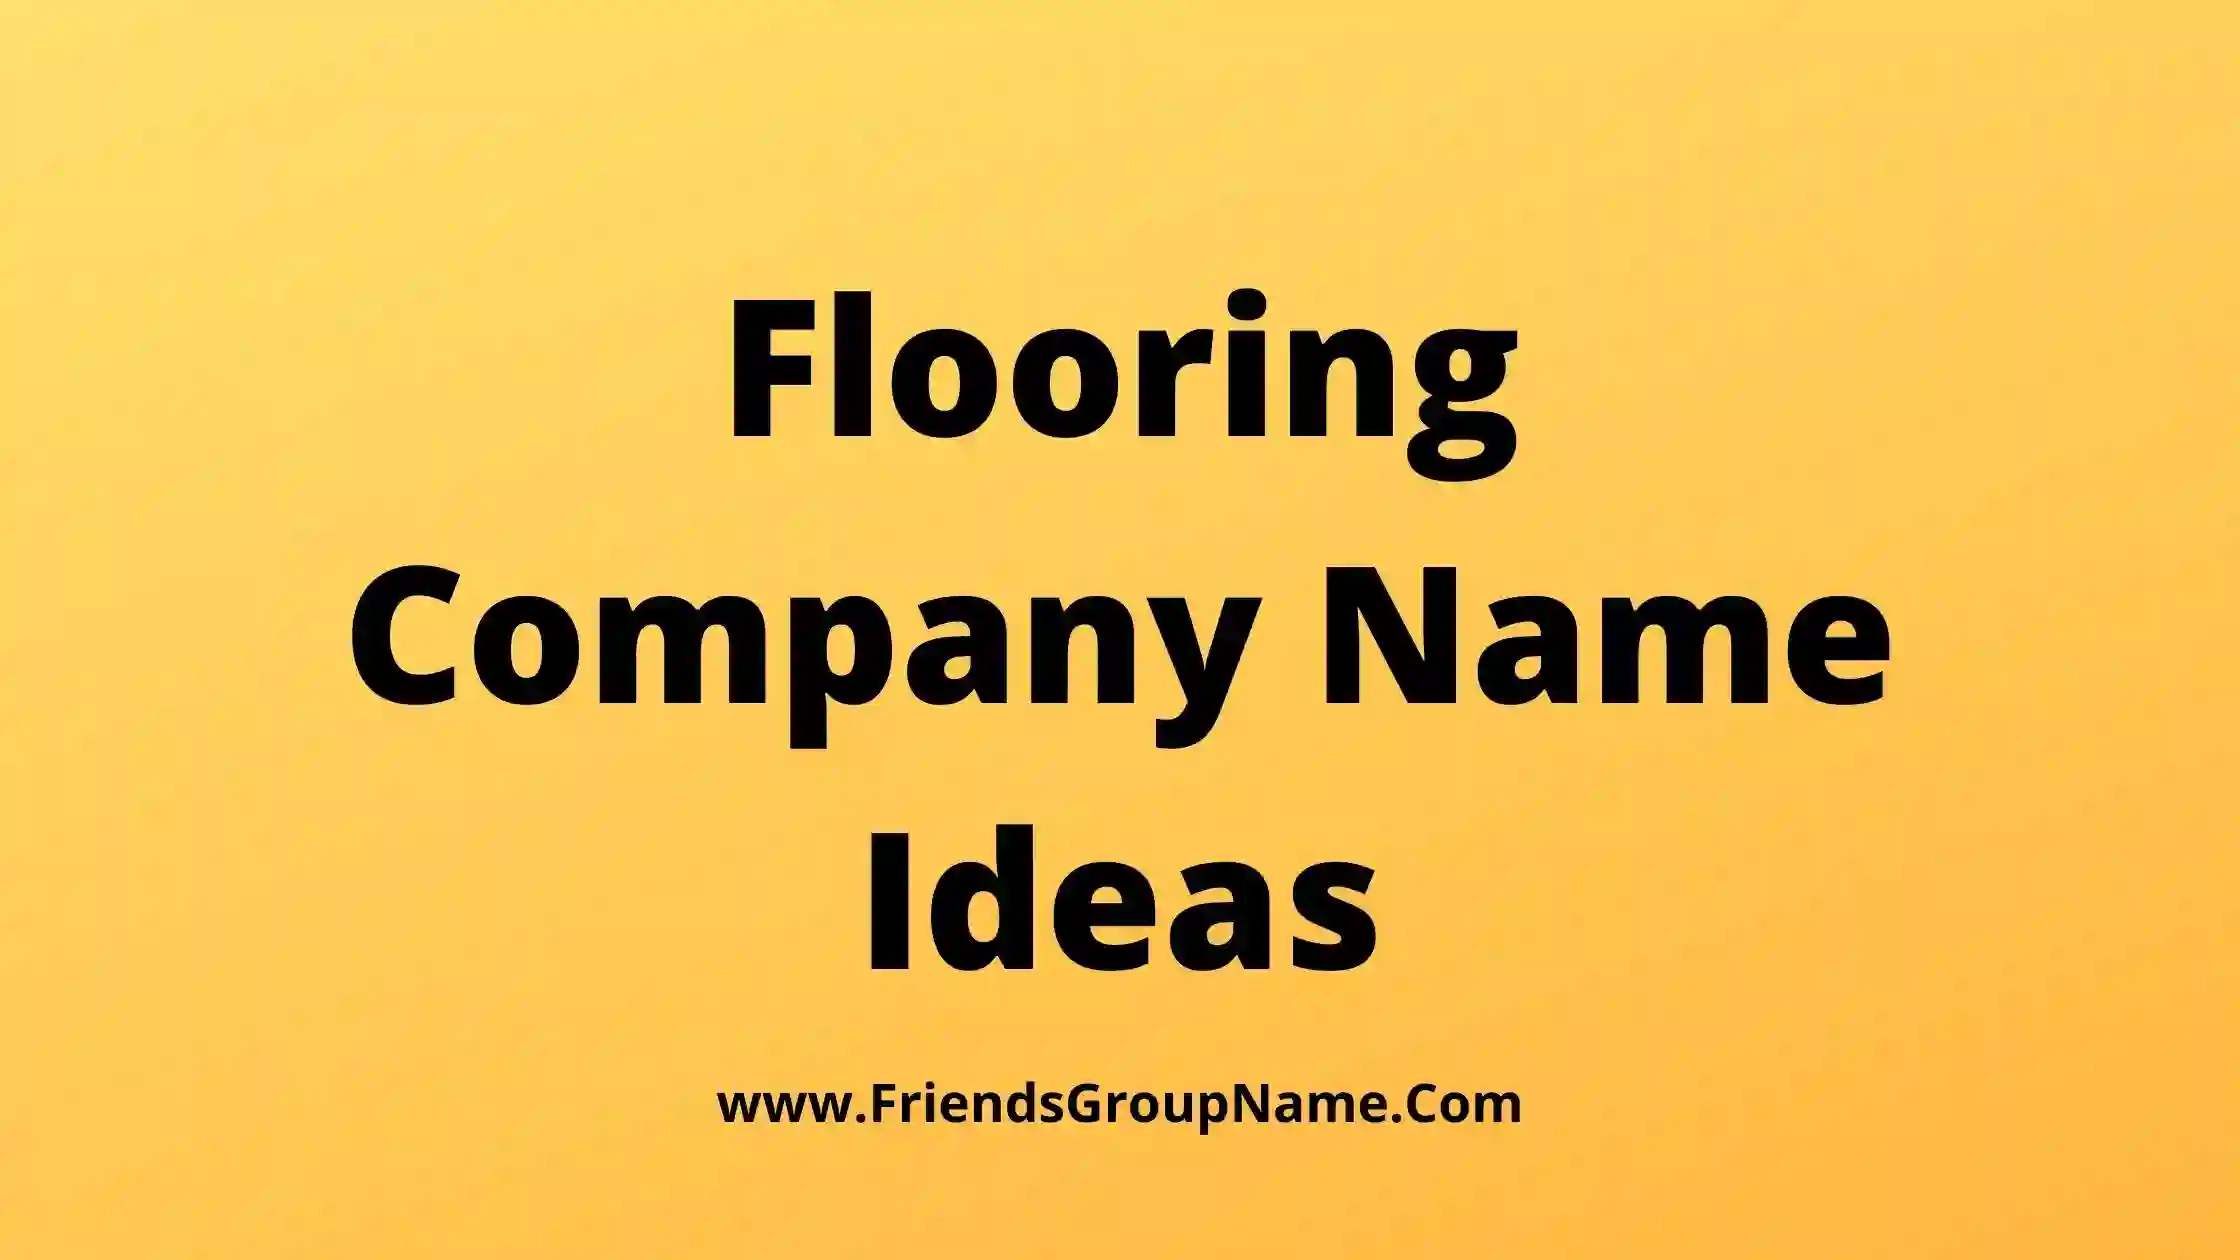 Flooring Company Name Ideas【2023】Best,Funny & Good Flooring Business Names  List